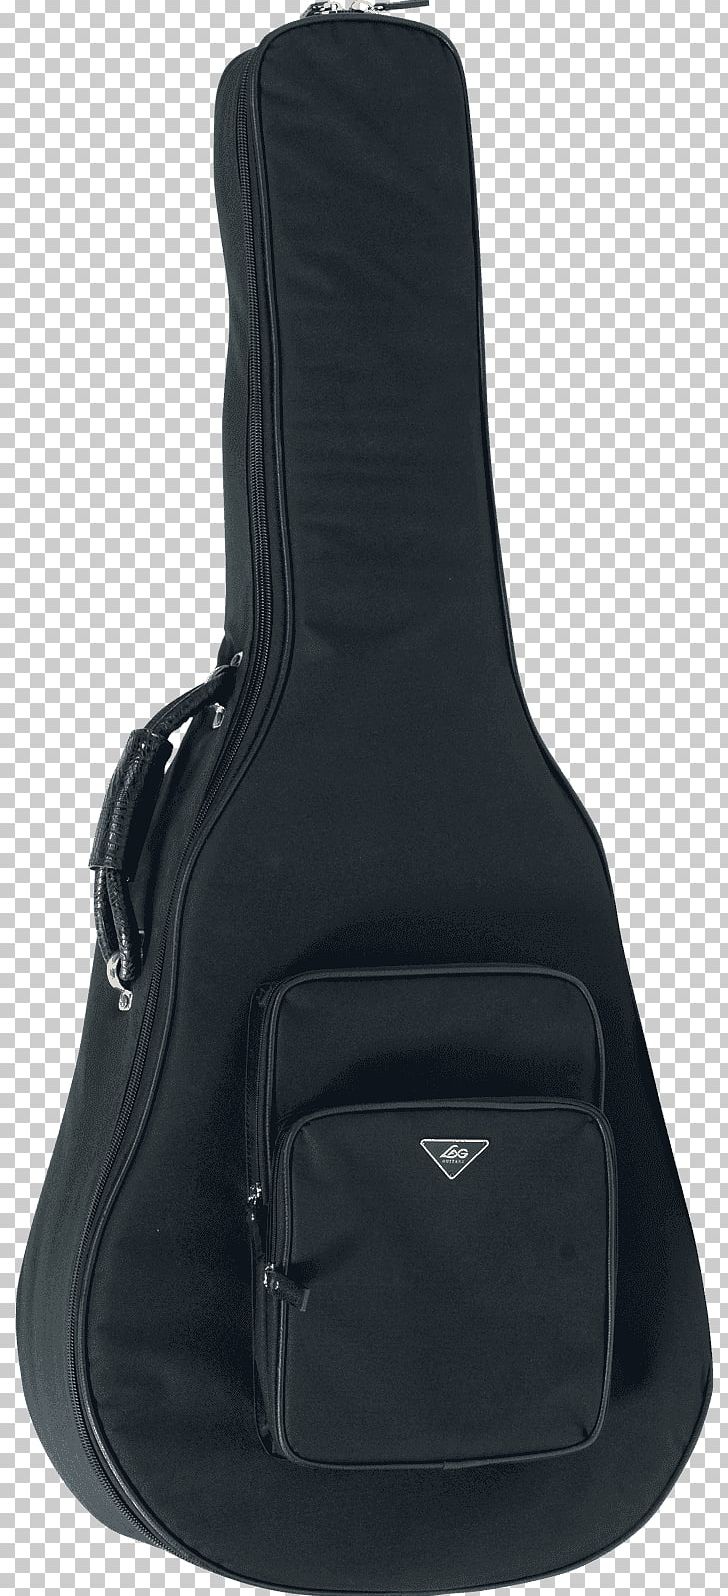 Electric Guitar Gig Bag Dreadnought Acoustic Guitar PNG, Clipart, Acoustic, Acoustic Music, Bag, Bass Guitar, Black Free PNG Download